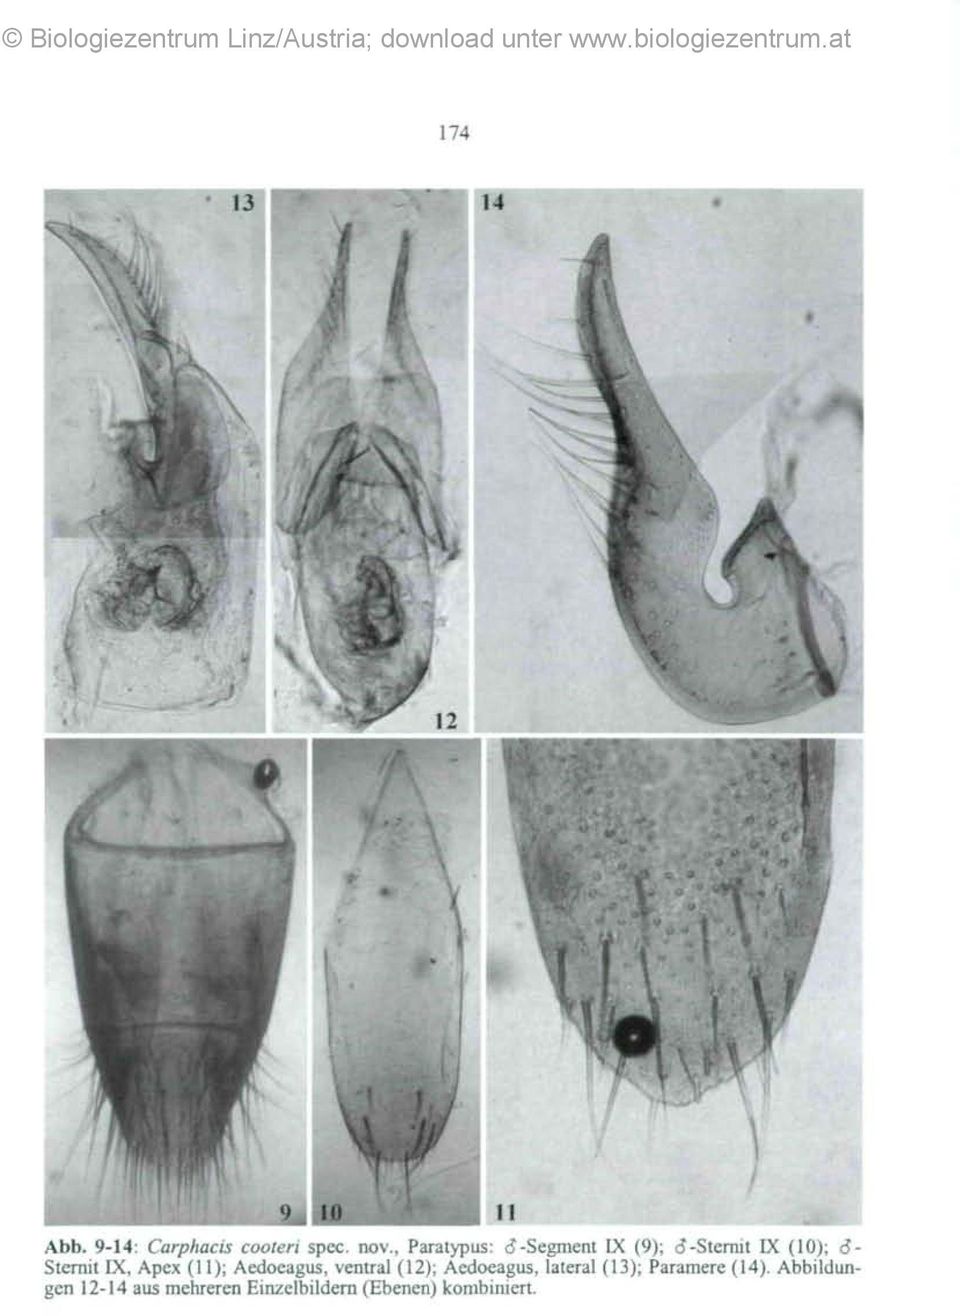 IX, Apex (11); Aedoeagus, ventral (12); Aedoeagus, lateral